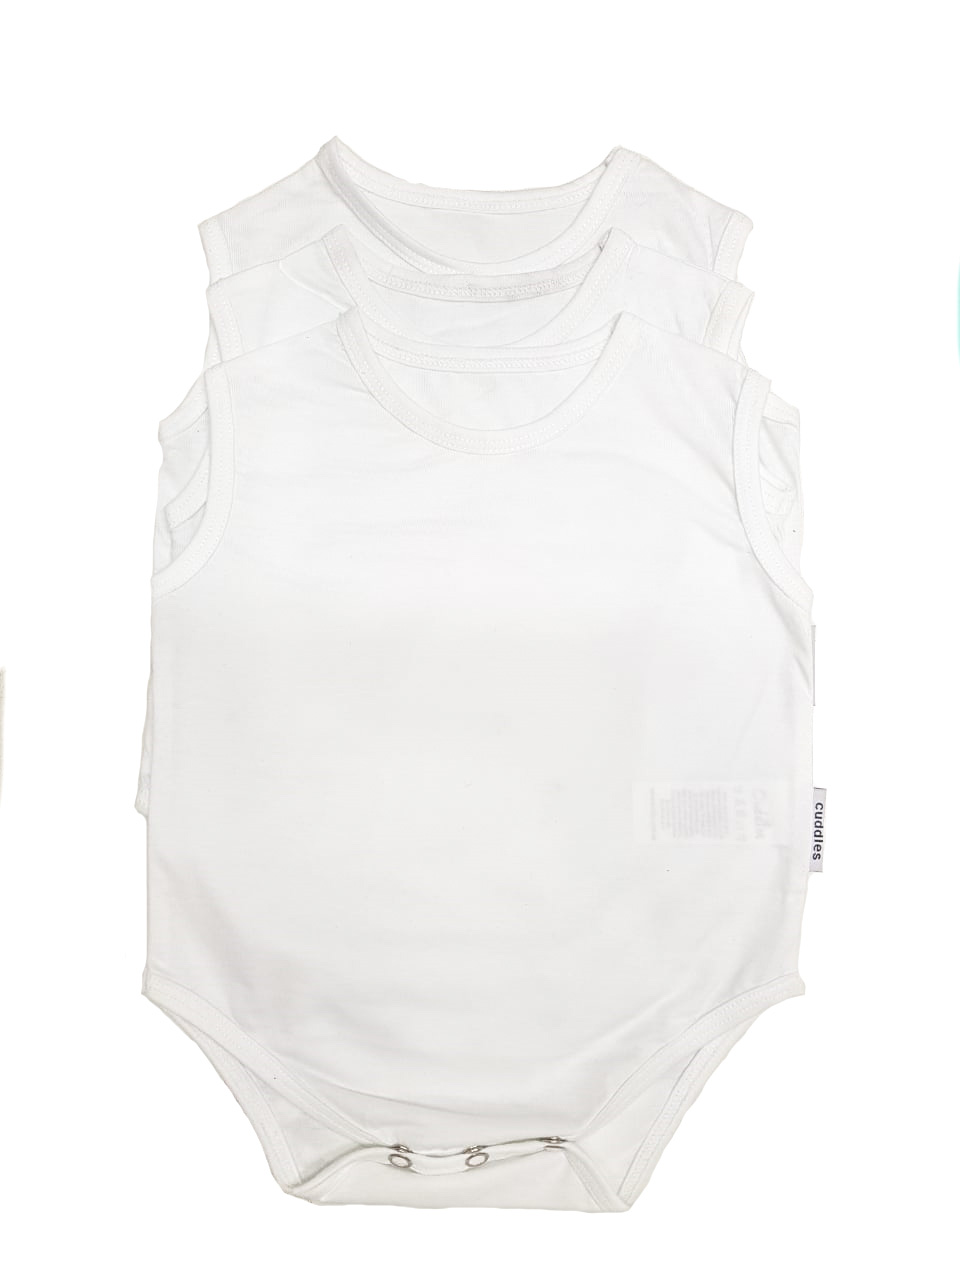 Baby pure cotton gạc jumpsuit vest không tay cho bé | Shopee Việt Nam